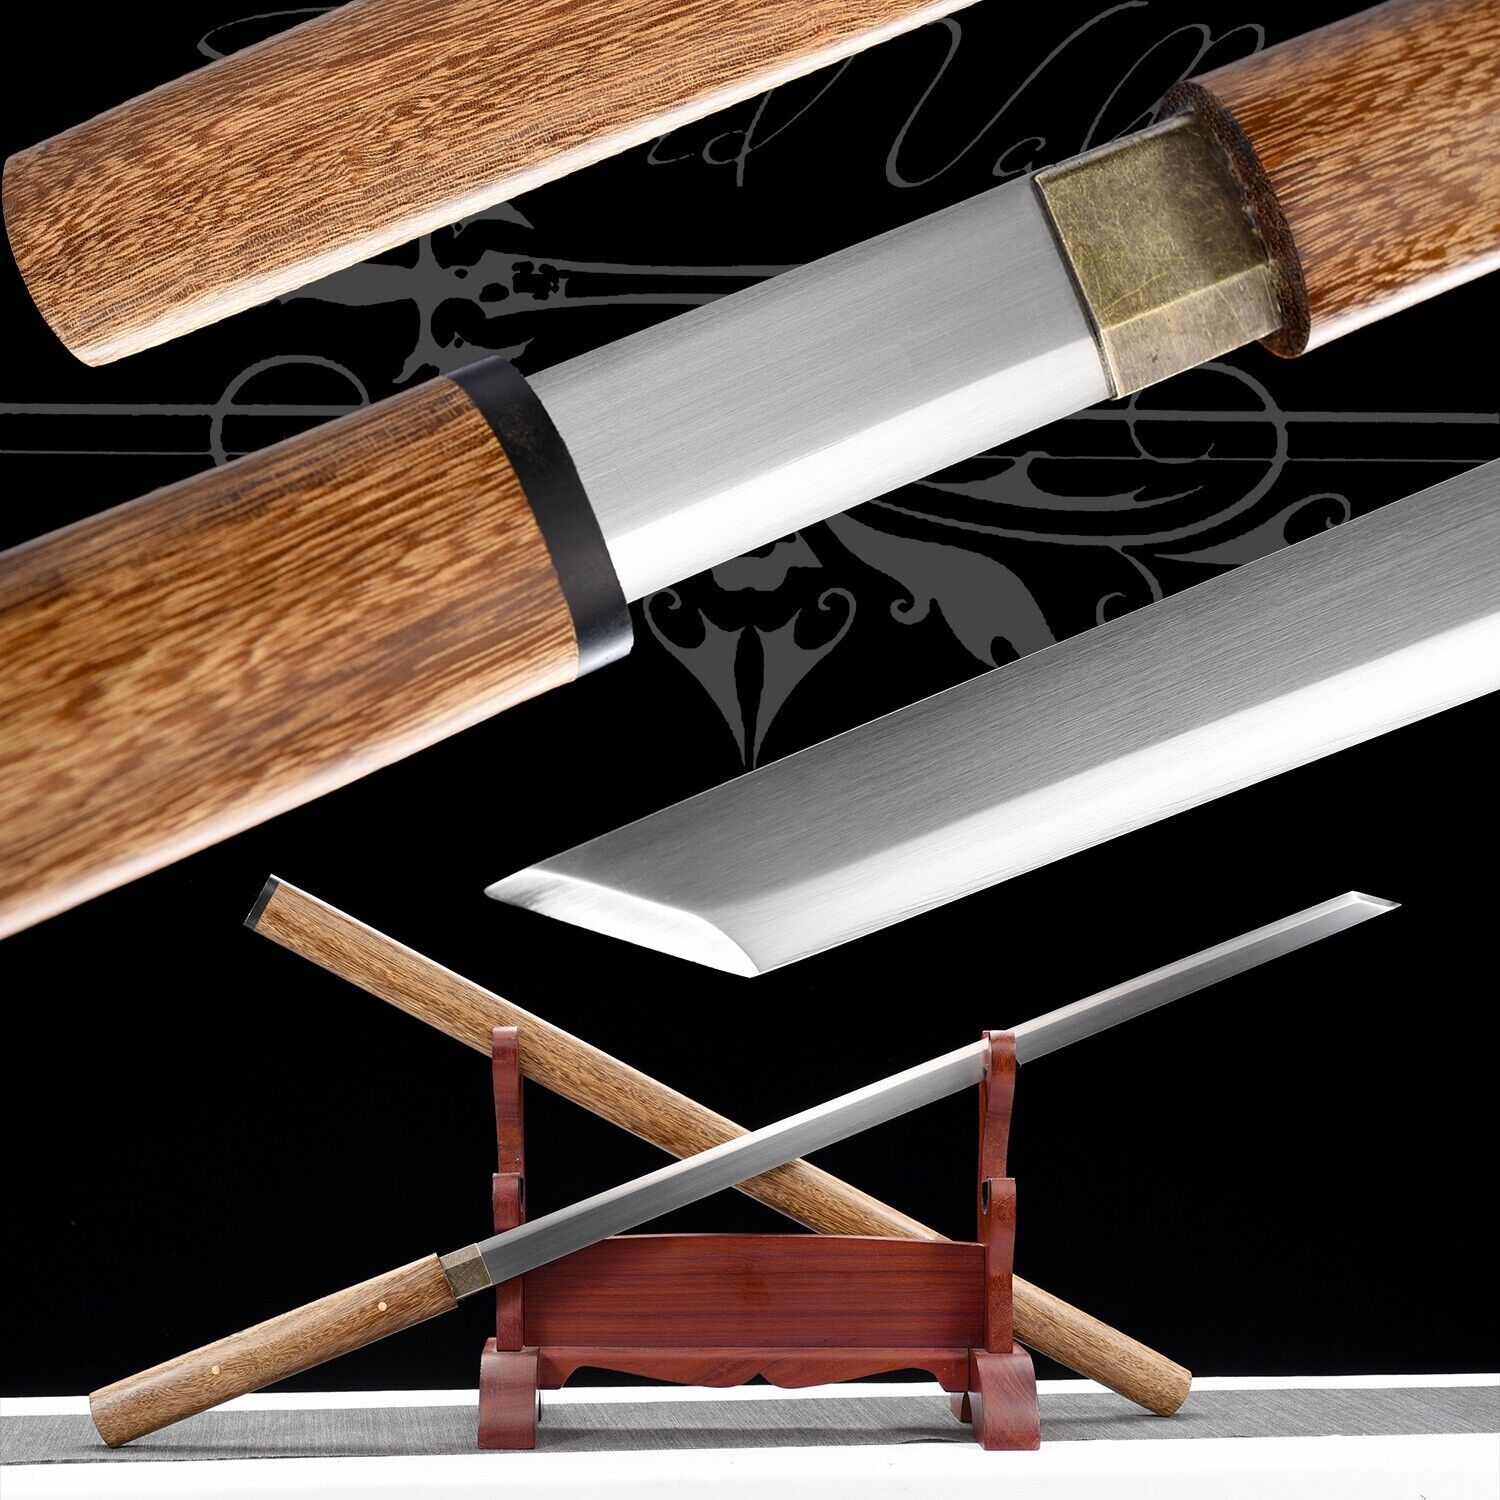 Handmade Katana/Manganese Steel/Collectible Real Sword/Full Tang/Fighting Master